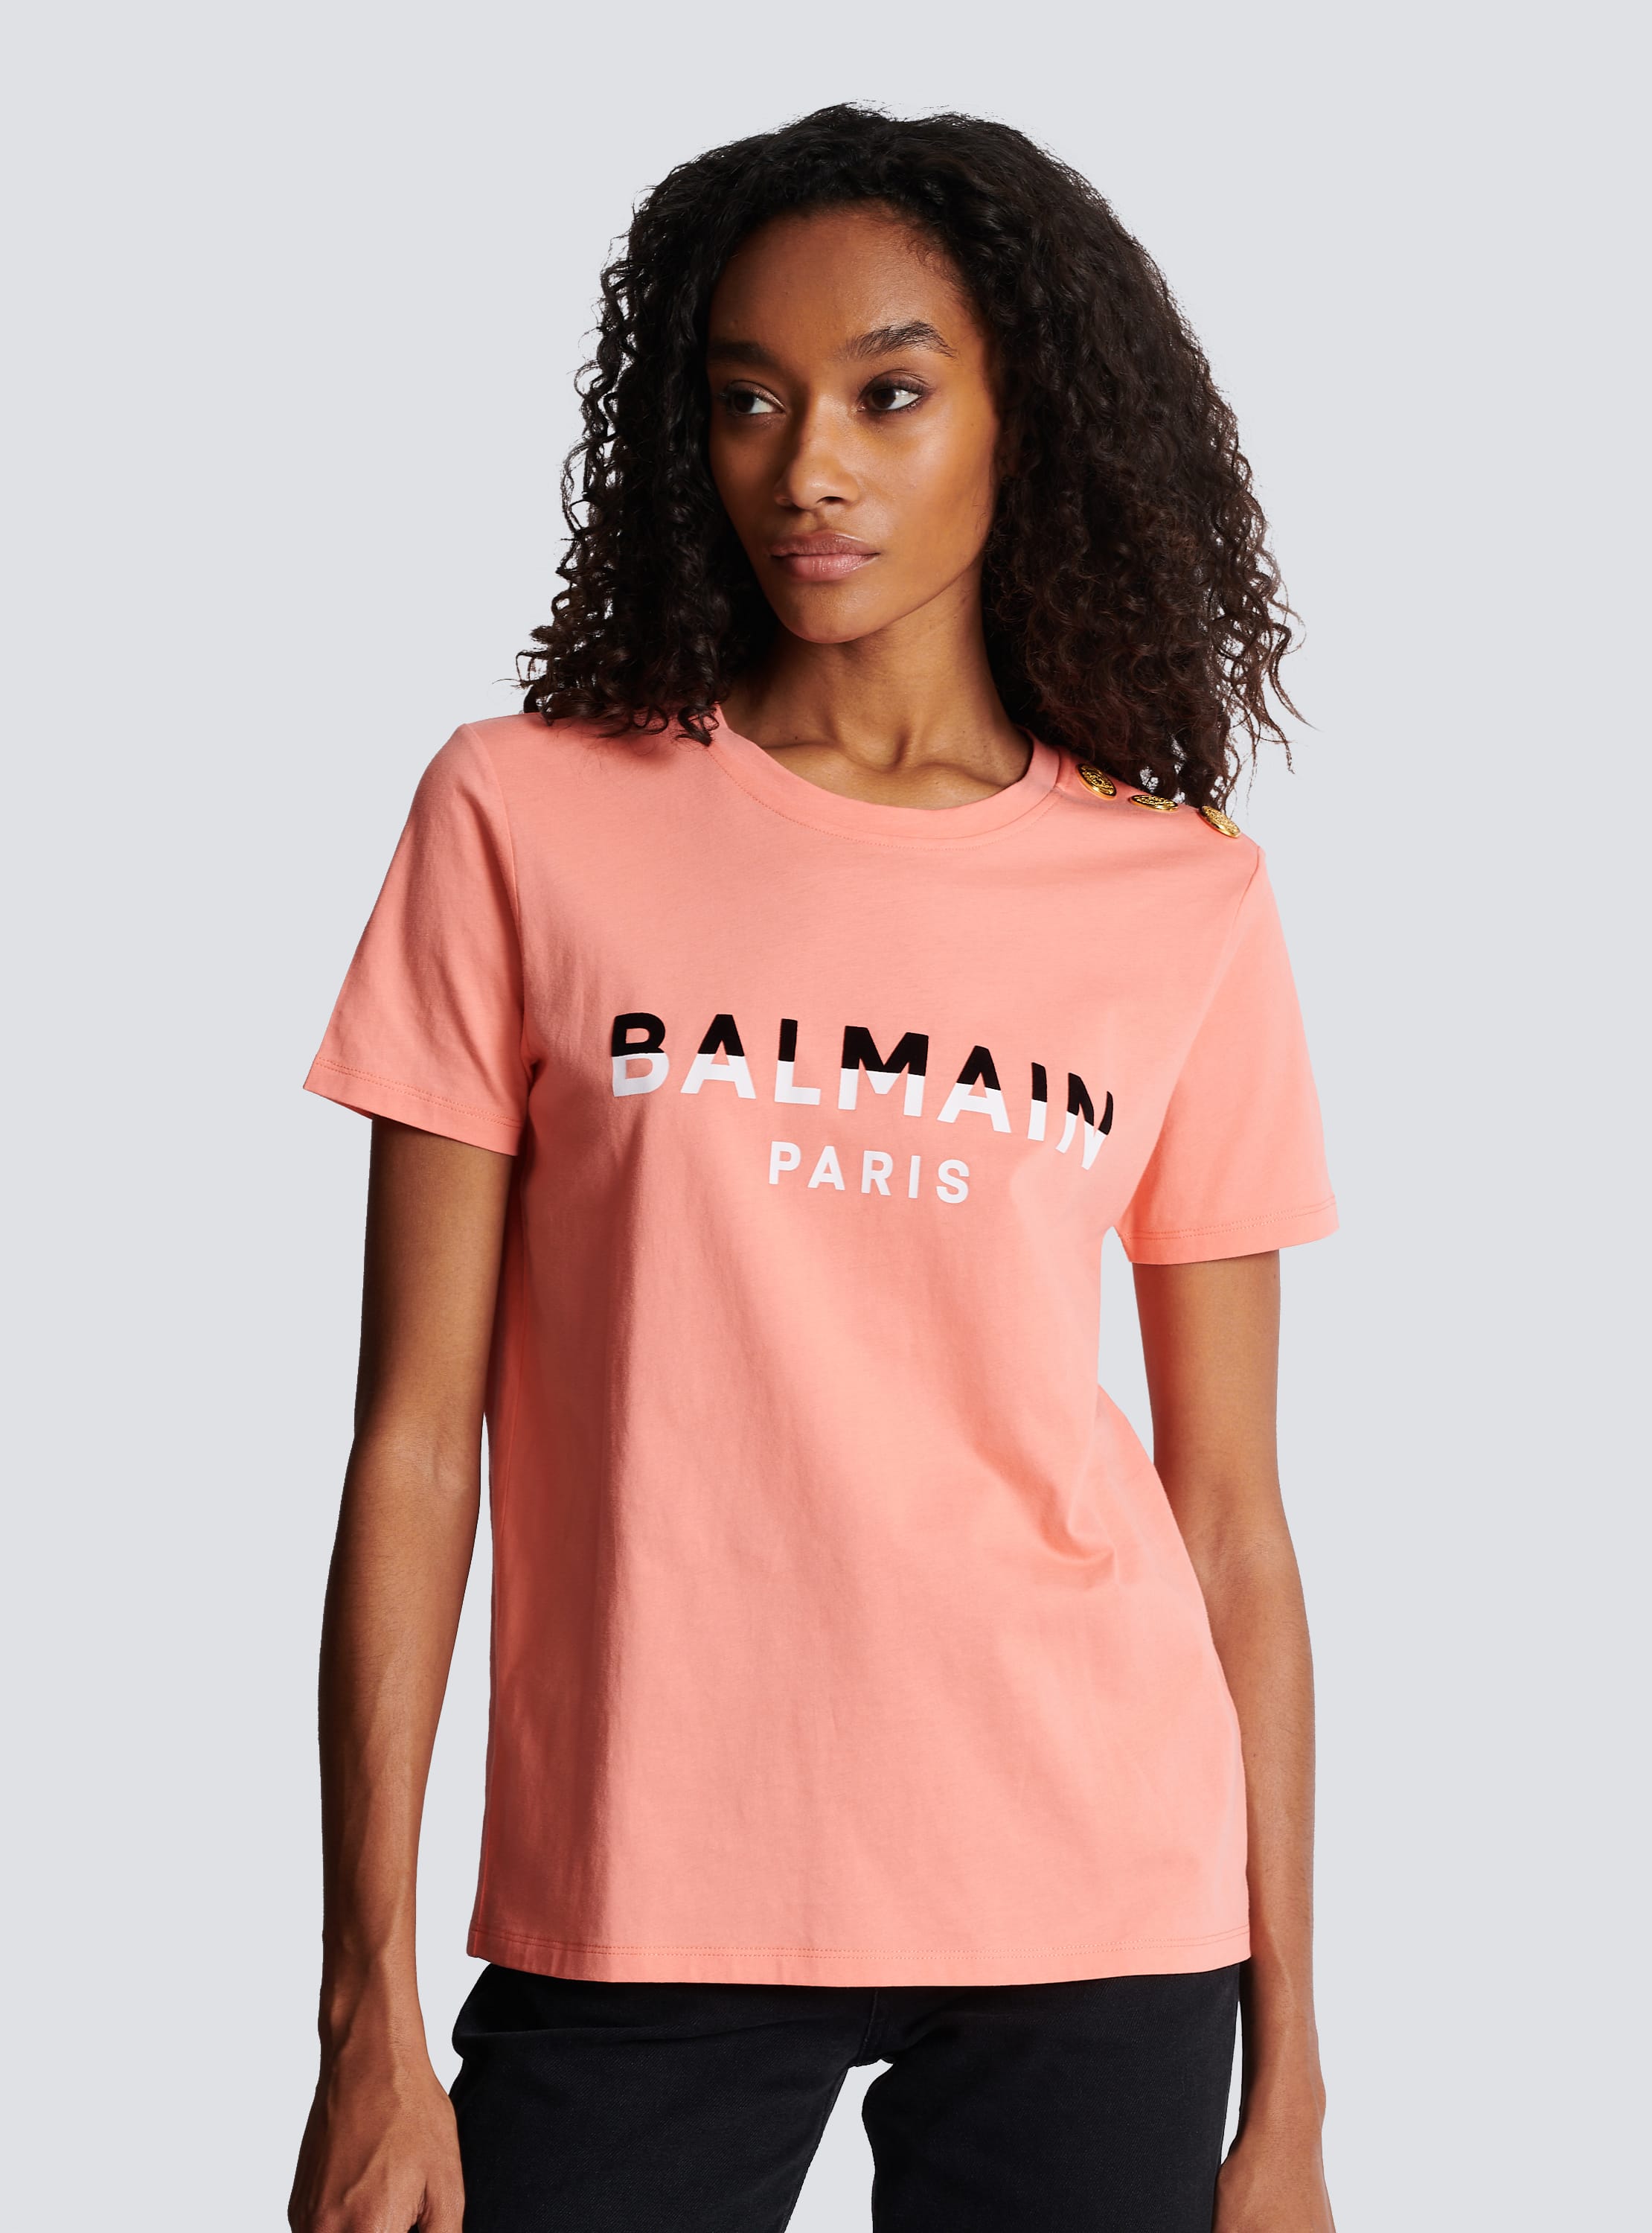 Flocked Balmain Paris T-Shirt pink - Women BALMAIN